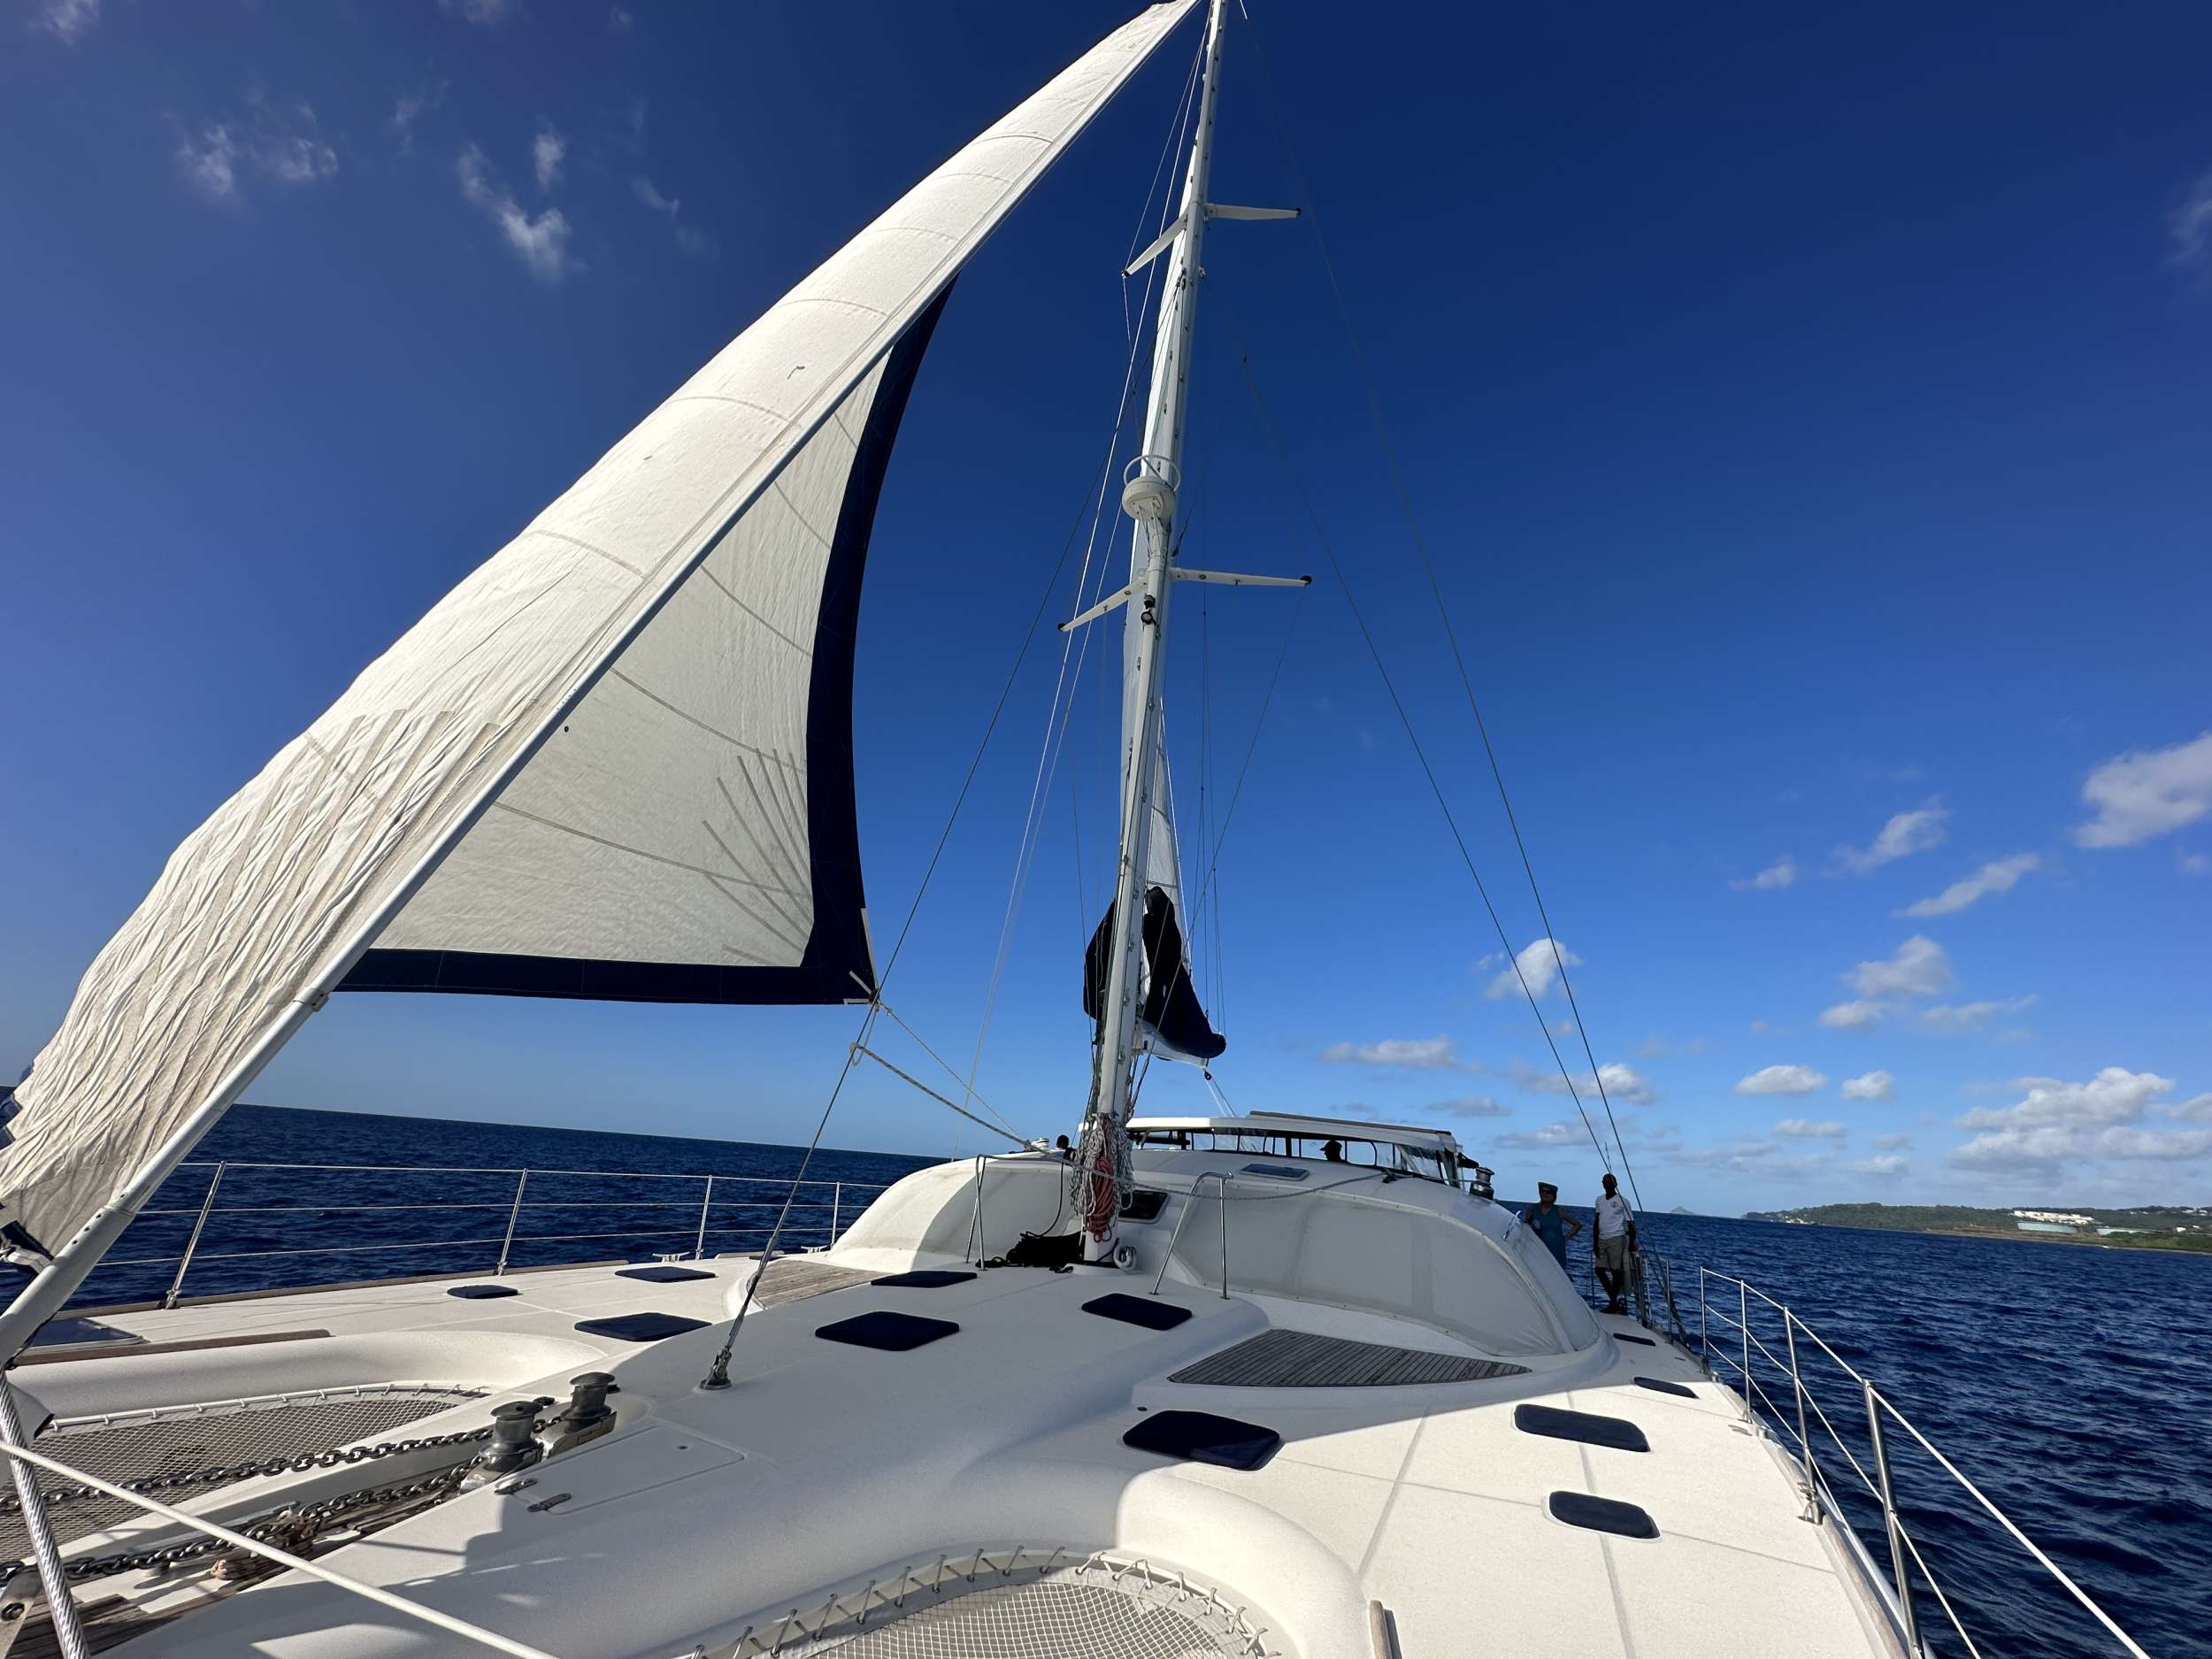 Lady Marigot - Luxury yacht charter Grenada & Boat hire in Caribbean 1